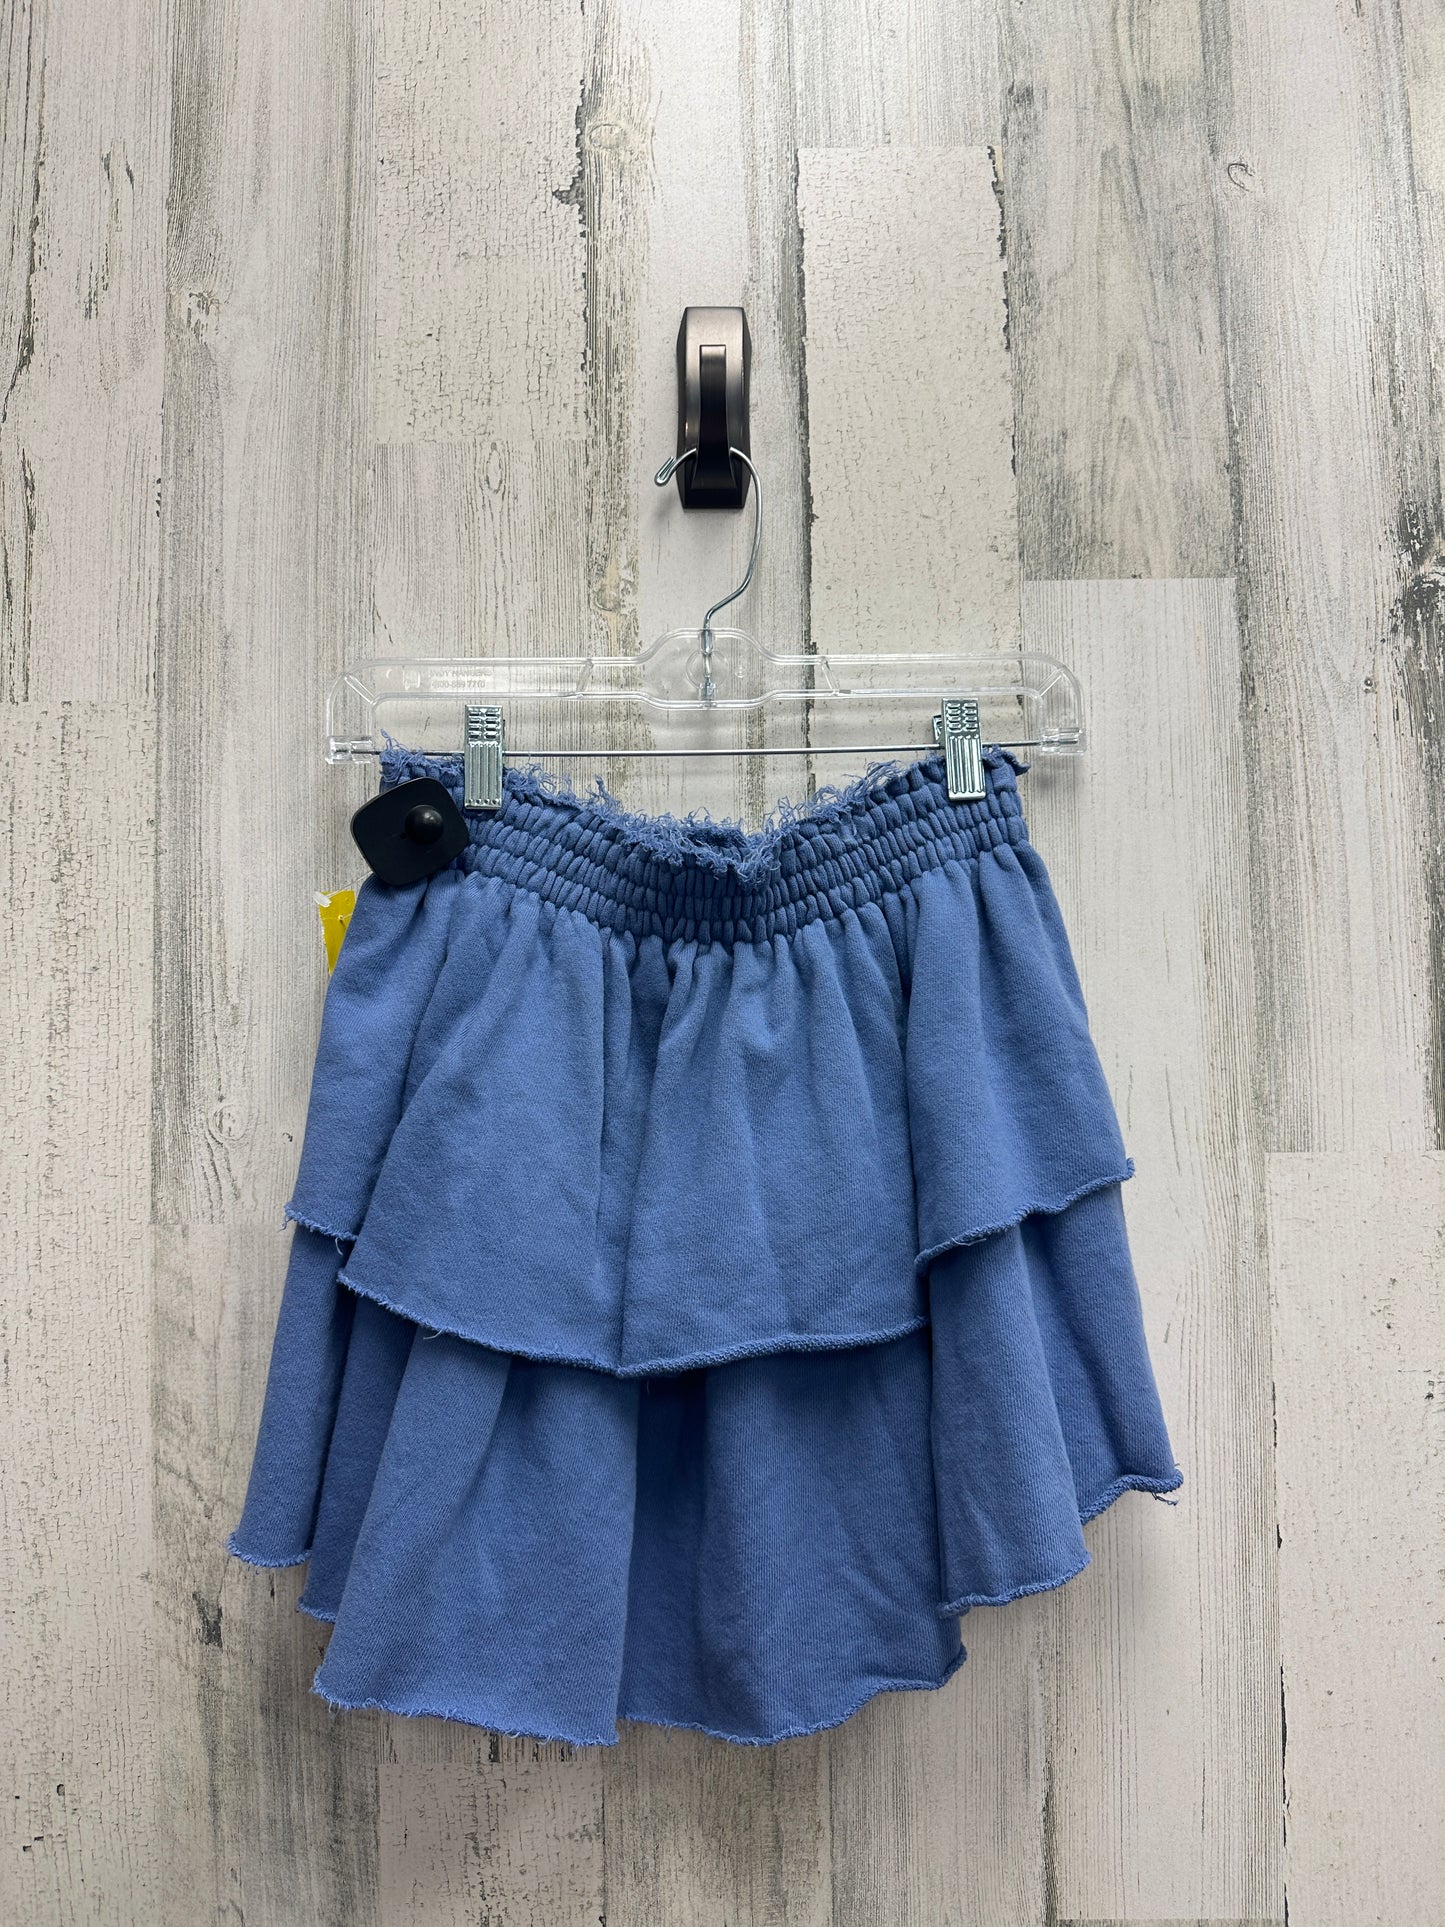 Skirt Mini & Short By Aerie  Size: M